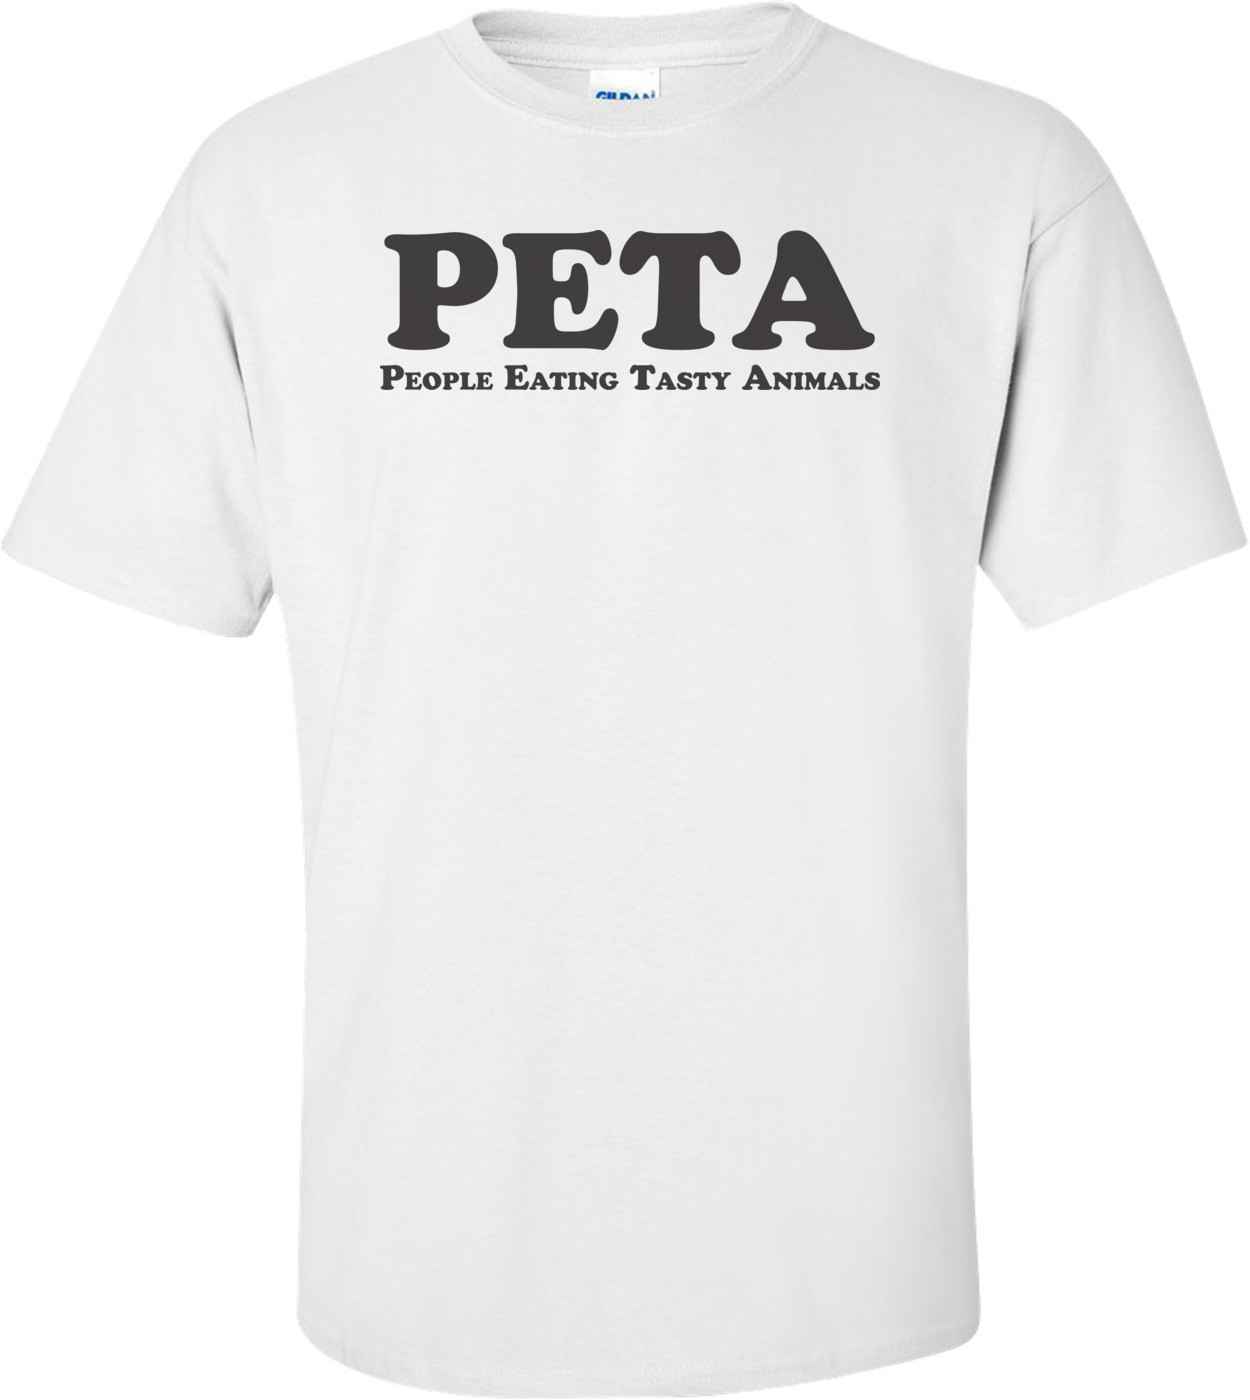 PETA - People Eating Tasty Animals T-shirt